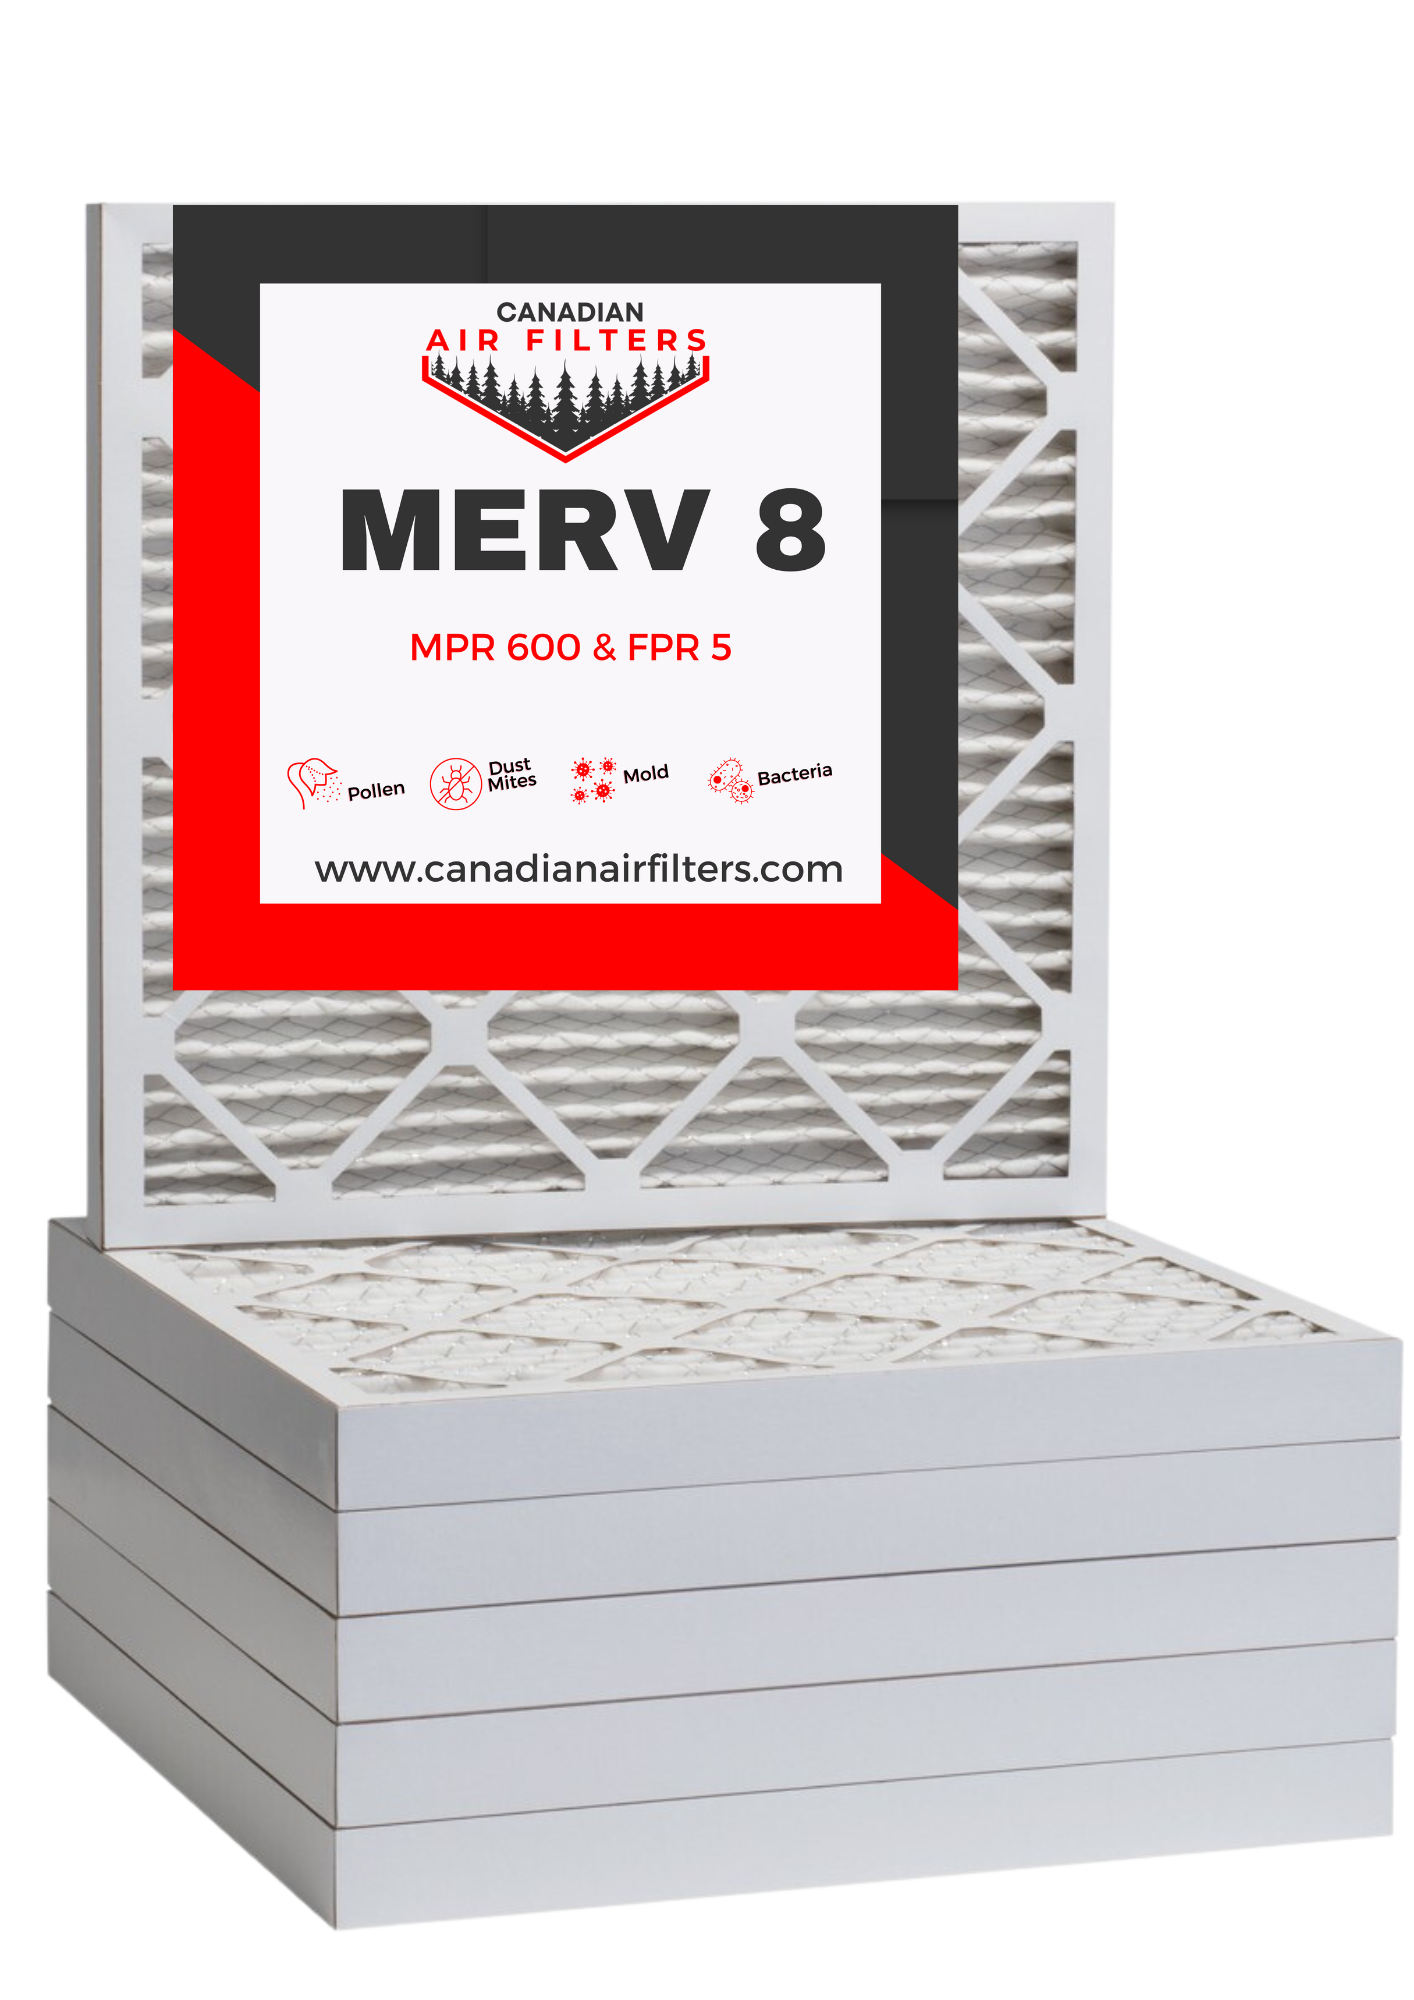 27.75 x 29.5 x 2 MERV 8 Pleated Air Filter (06 pack)